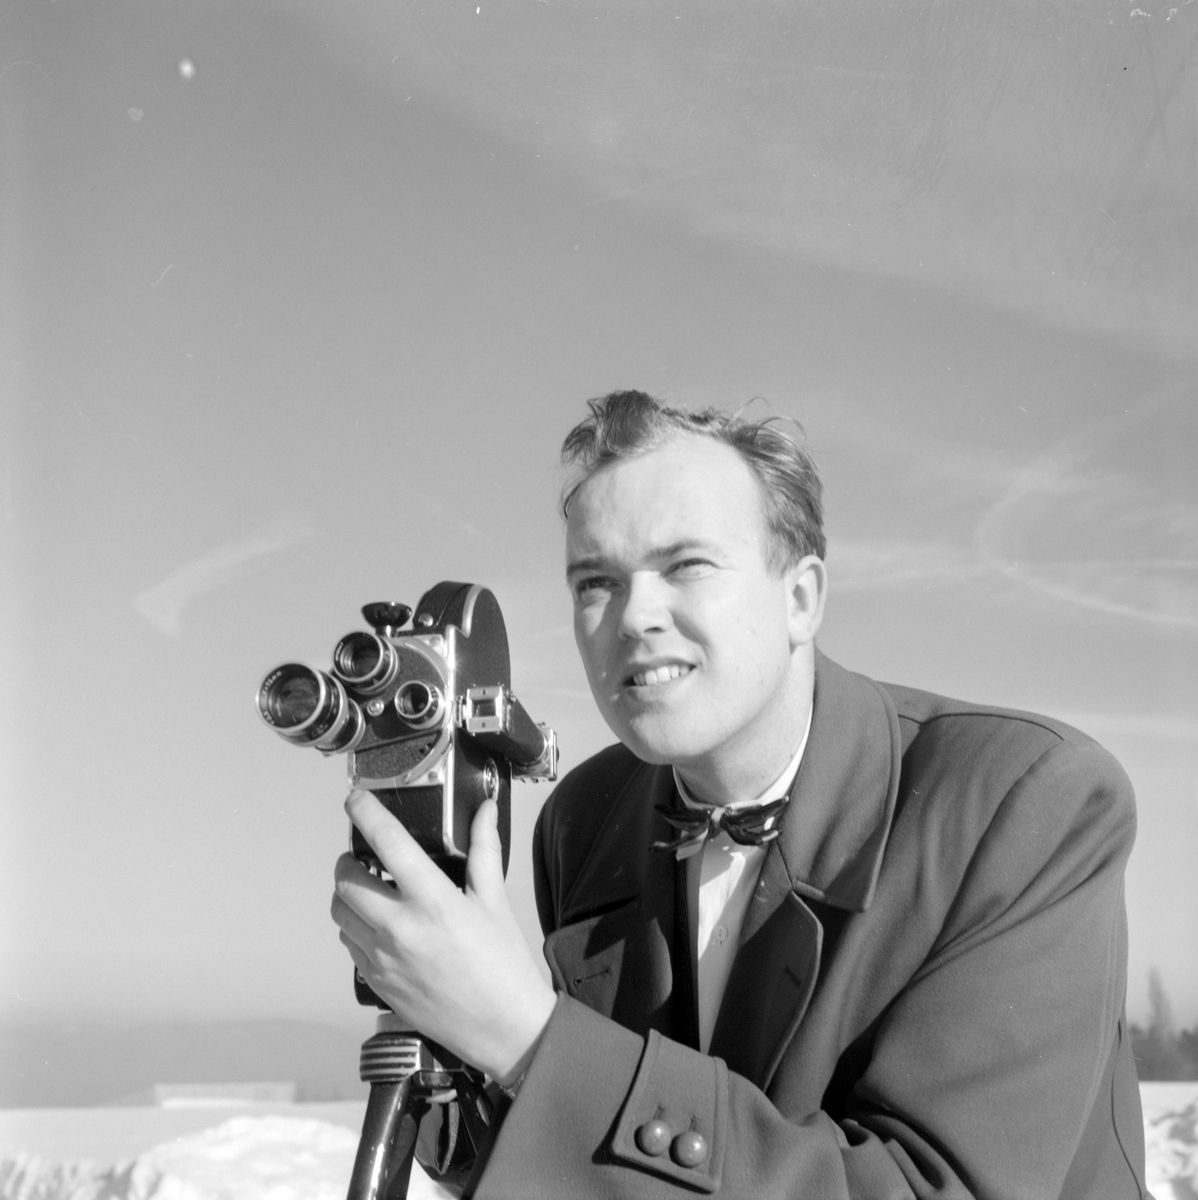 Norsk landbruks jubileumsutstilling 1959. Fotografen bak kameraet.